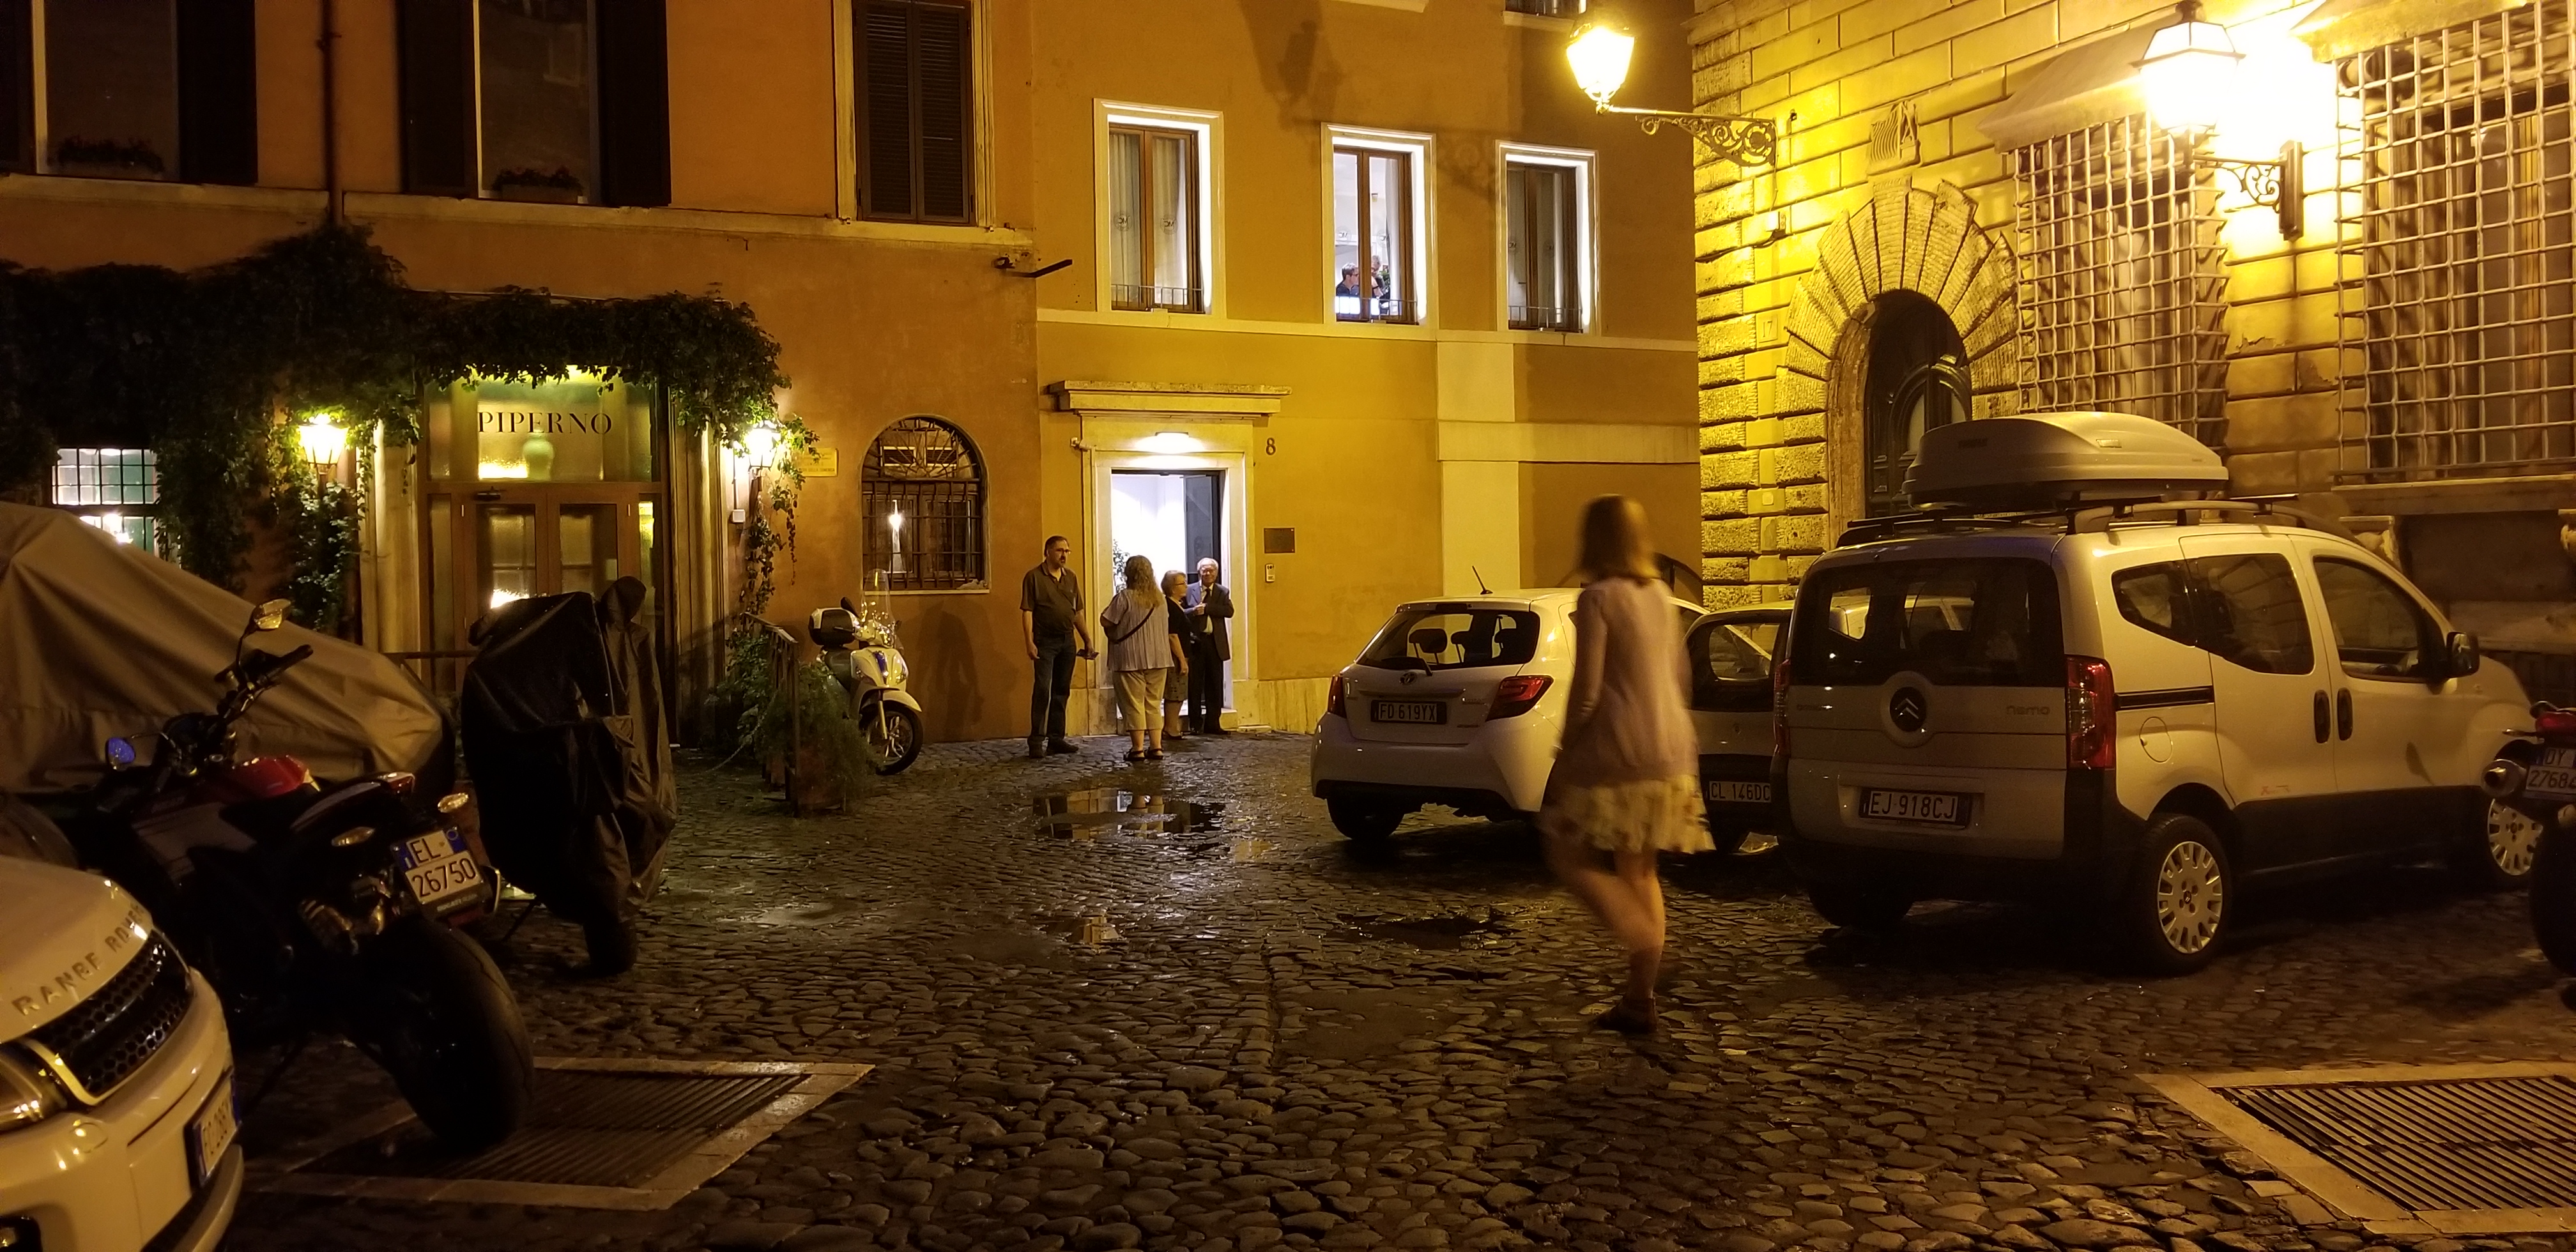 Night in Rome - Senior Trip to Rome